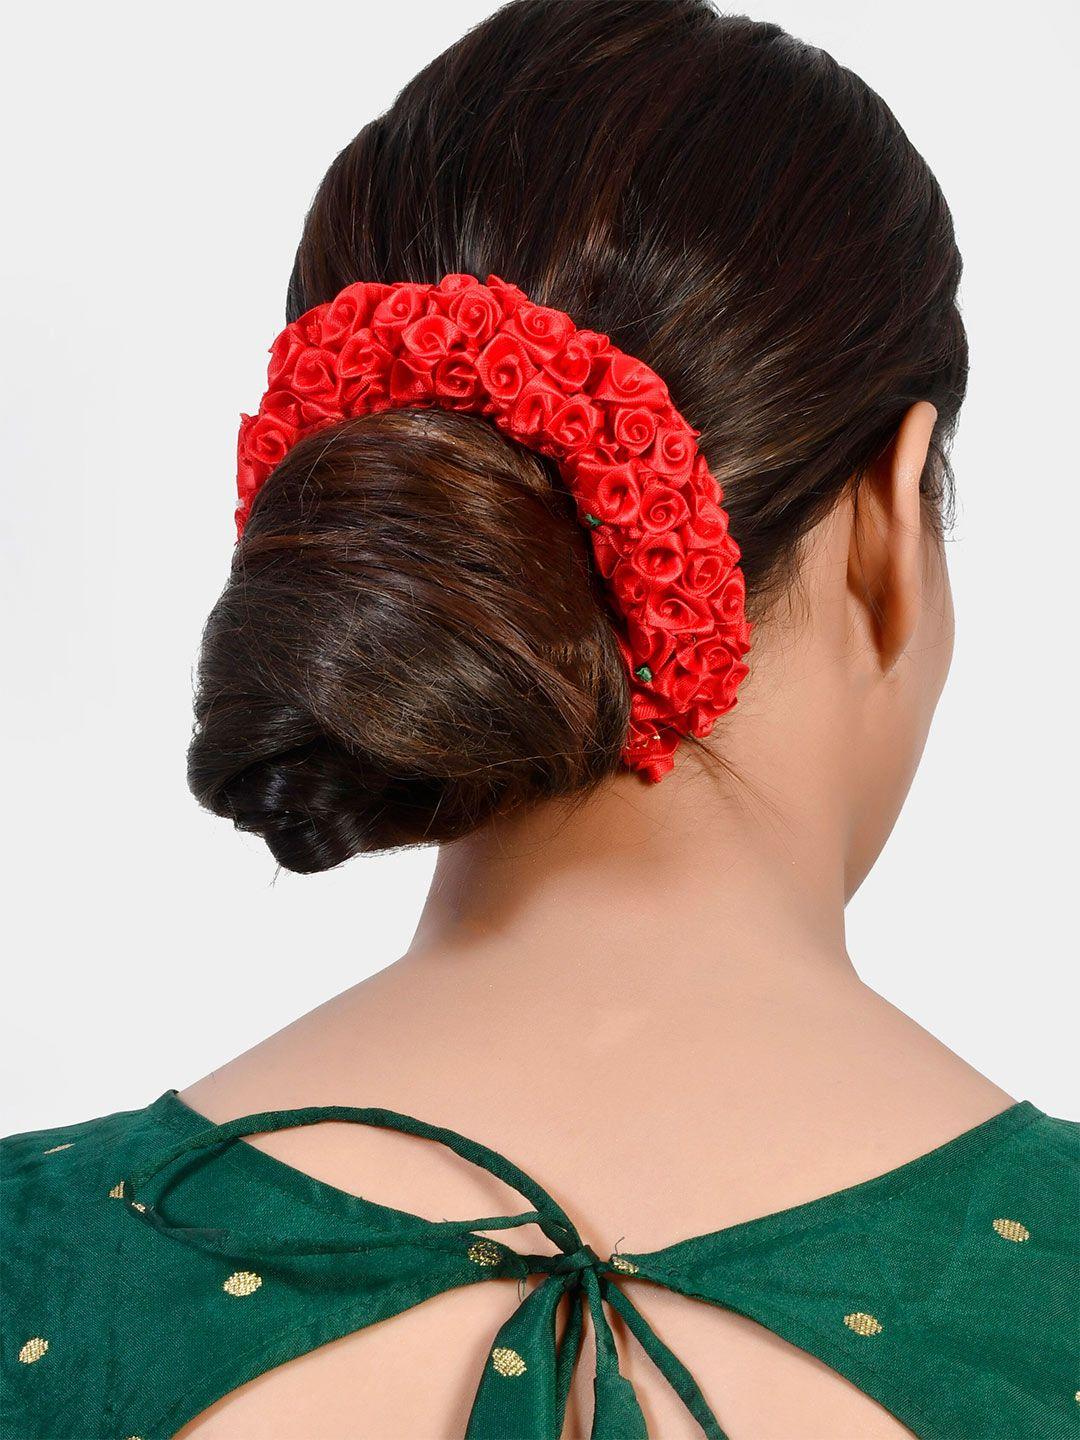 silvermerc-designs-women-red-floral-hair-accessory